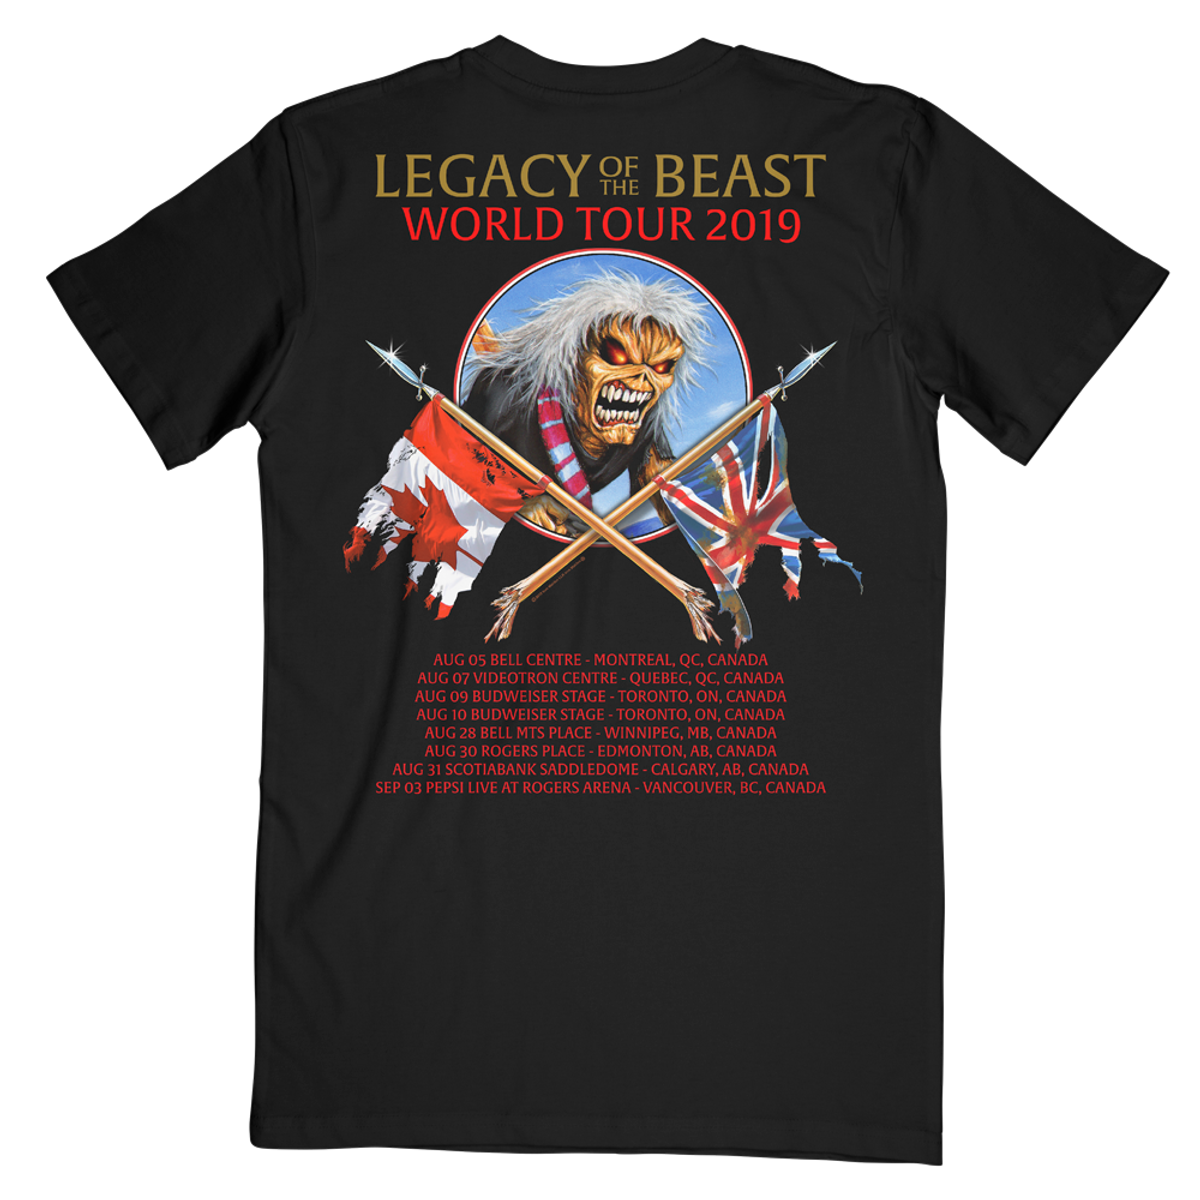 legacy-of-the-beast-2019-tour-canada-tee?u=aHR0cHM6Ly9tdXNpY2dsdWUtdXNlci1hcHAtcC0yLXAuczMuYW1hem9uYXdzLmNvbS9vcmlnaW5hbHMvNWFhOTUxOTEtMTQ3Zi00MzBkLThmMzAtMDcwNDYwMDlmMWEx&width=1200&mode=contain